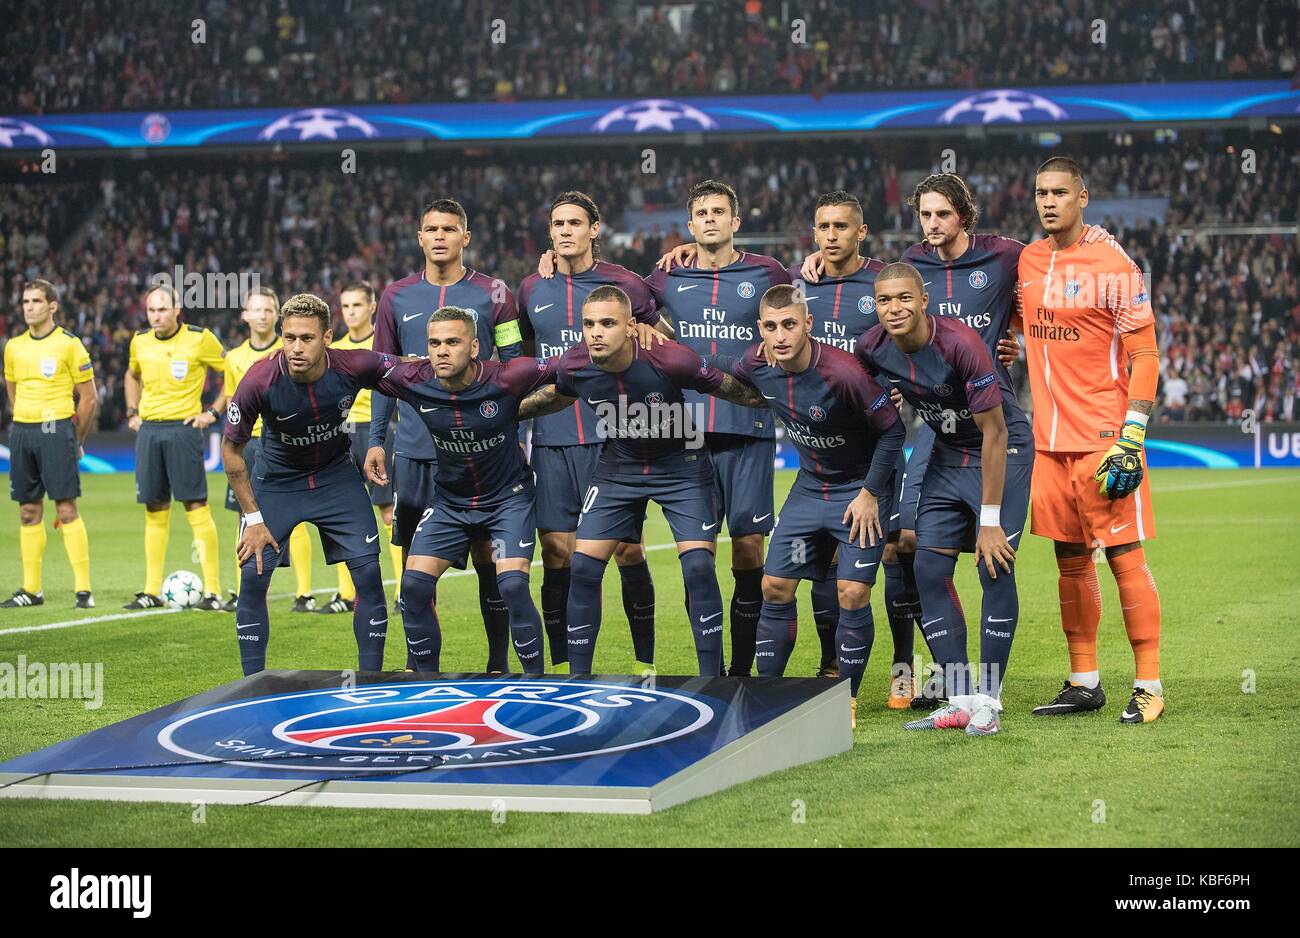 Team Paris, with left to right hinten Thiago SILVA (Paris), Edinson CAVANI (Paris), Thiago MOTTA (Paris), MARQUINHOS (Paris), Adrien RABIOT (Paris), goalwart Alphonse AREOLA (Paris), vorne left to right NEYMAR (Paris), Dani ALVES (Paris), Layvin KURZAWA (Paris), Thiago MOTTA (Paris), Kylian MBAPPE (Paris), Fussball Champions League, Vorrunde 2. Spieltag, Gruppe B, Paris St. Germain - FC Bayern Munich (M) 3:0, am 27.09.2017 in Paris/ Frankreich. |usage worldwide Stock Photo